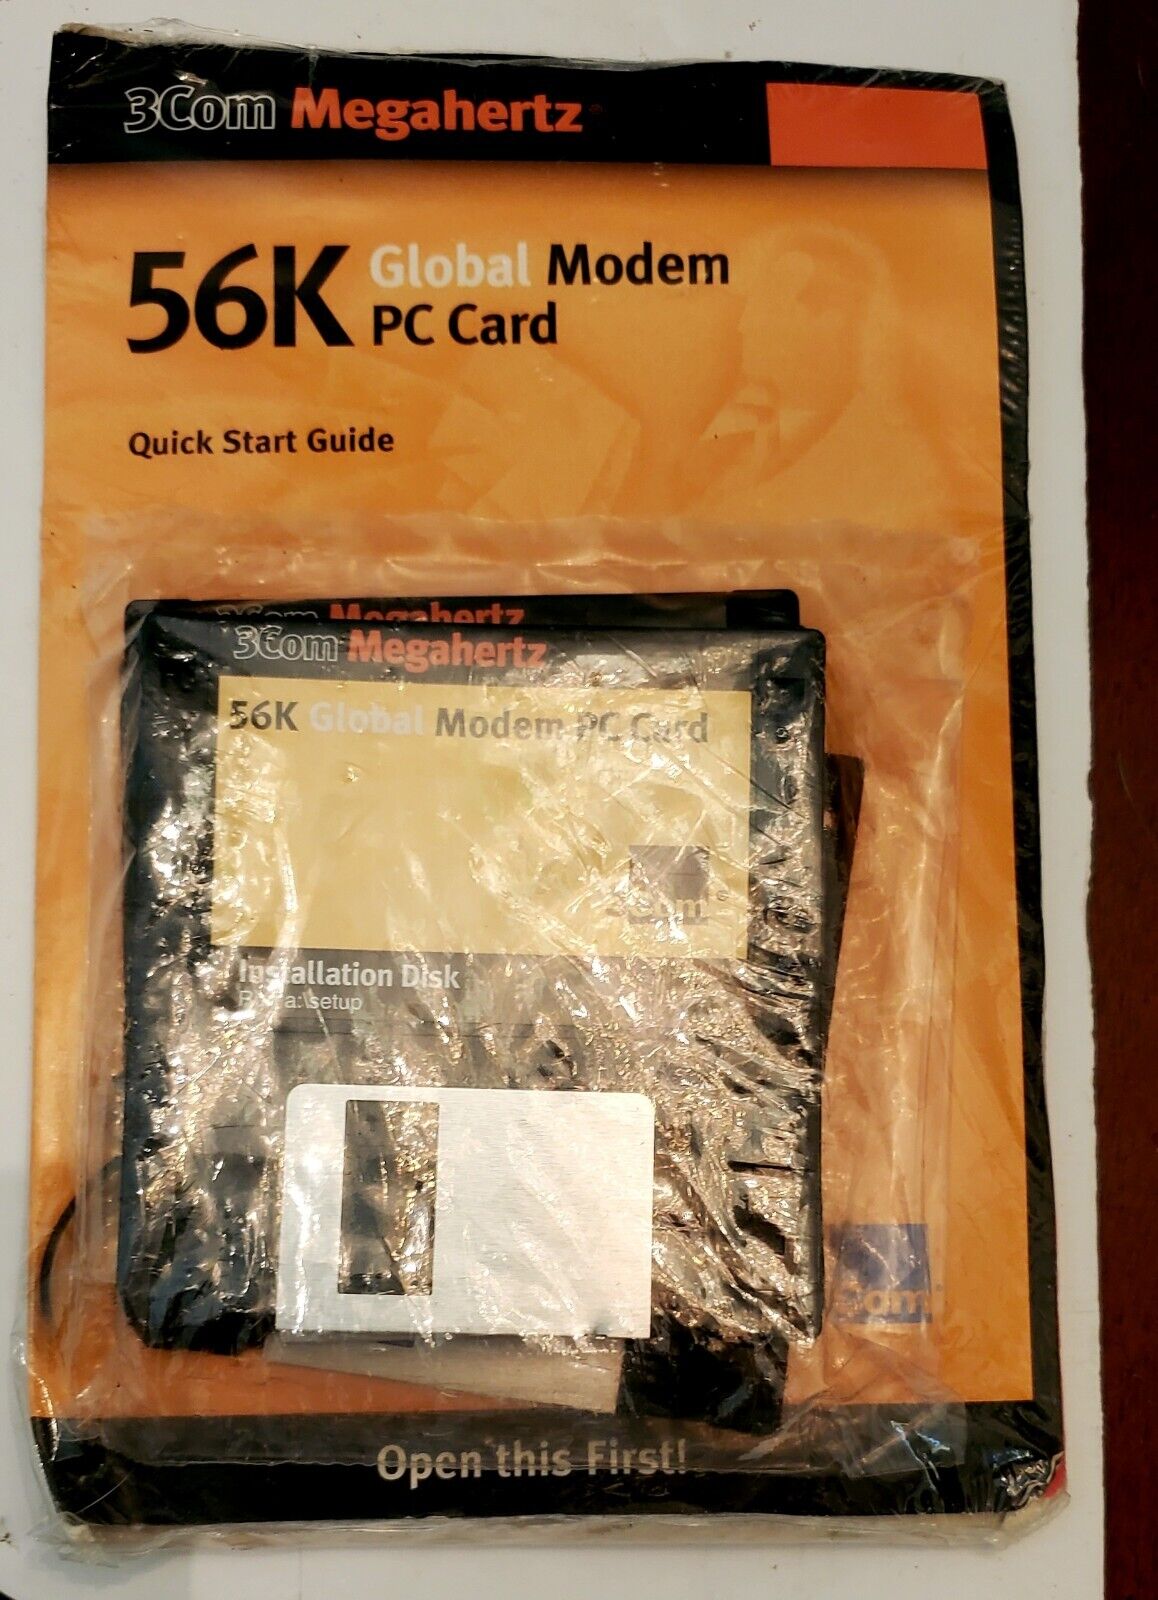 3Com Megahertz 56K Global Modem PC Card 5 Floppy Disk SF540S Installation. New